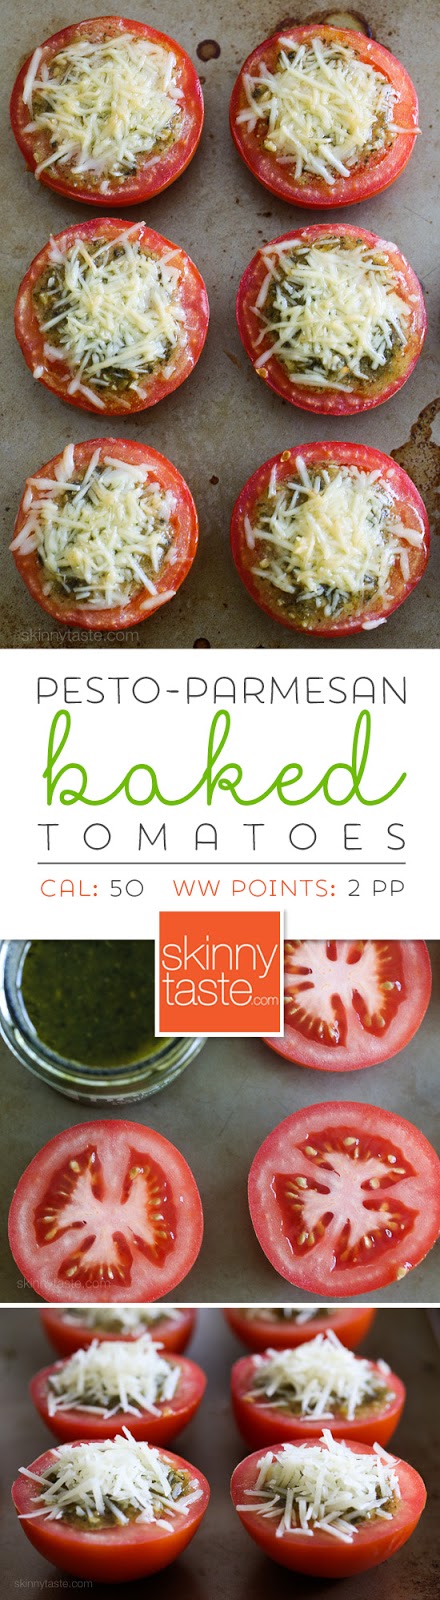 Bakedpesto-parmesantomatoes-1